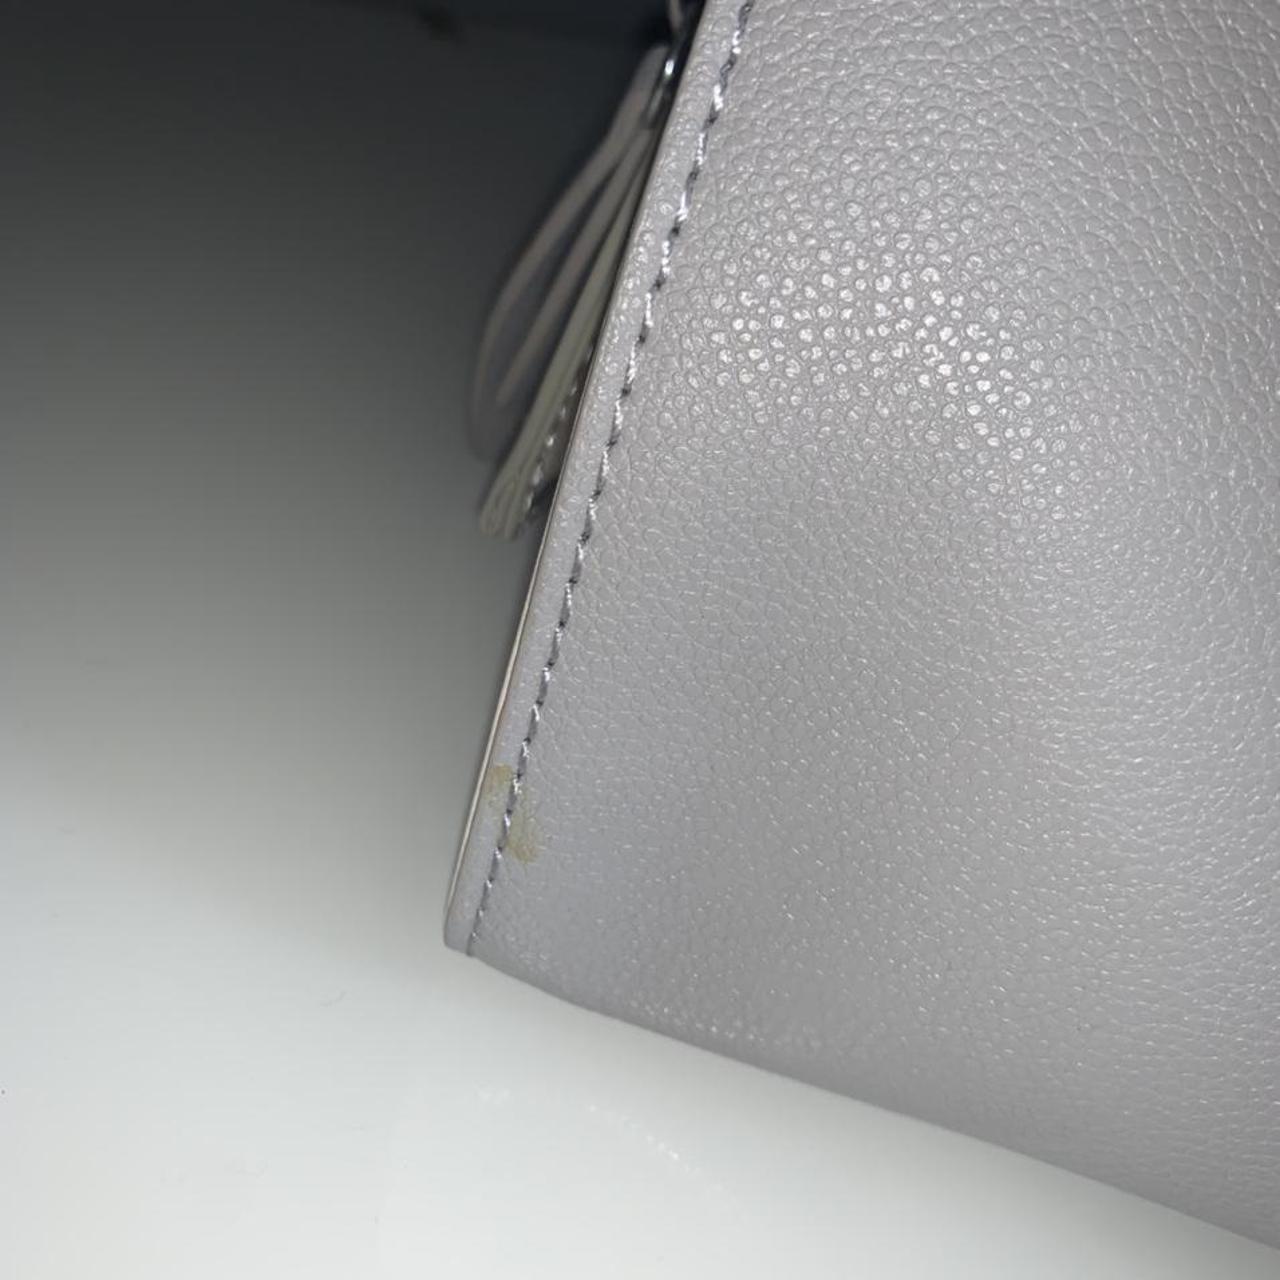 Product Image 4 - Fiorelli handbag.

Good condition, one small